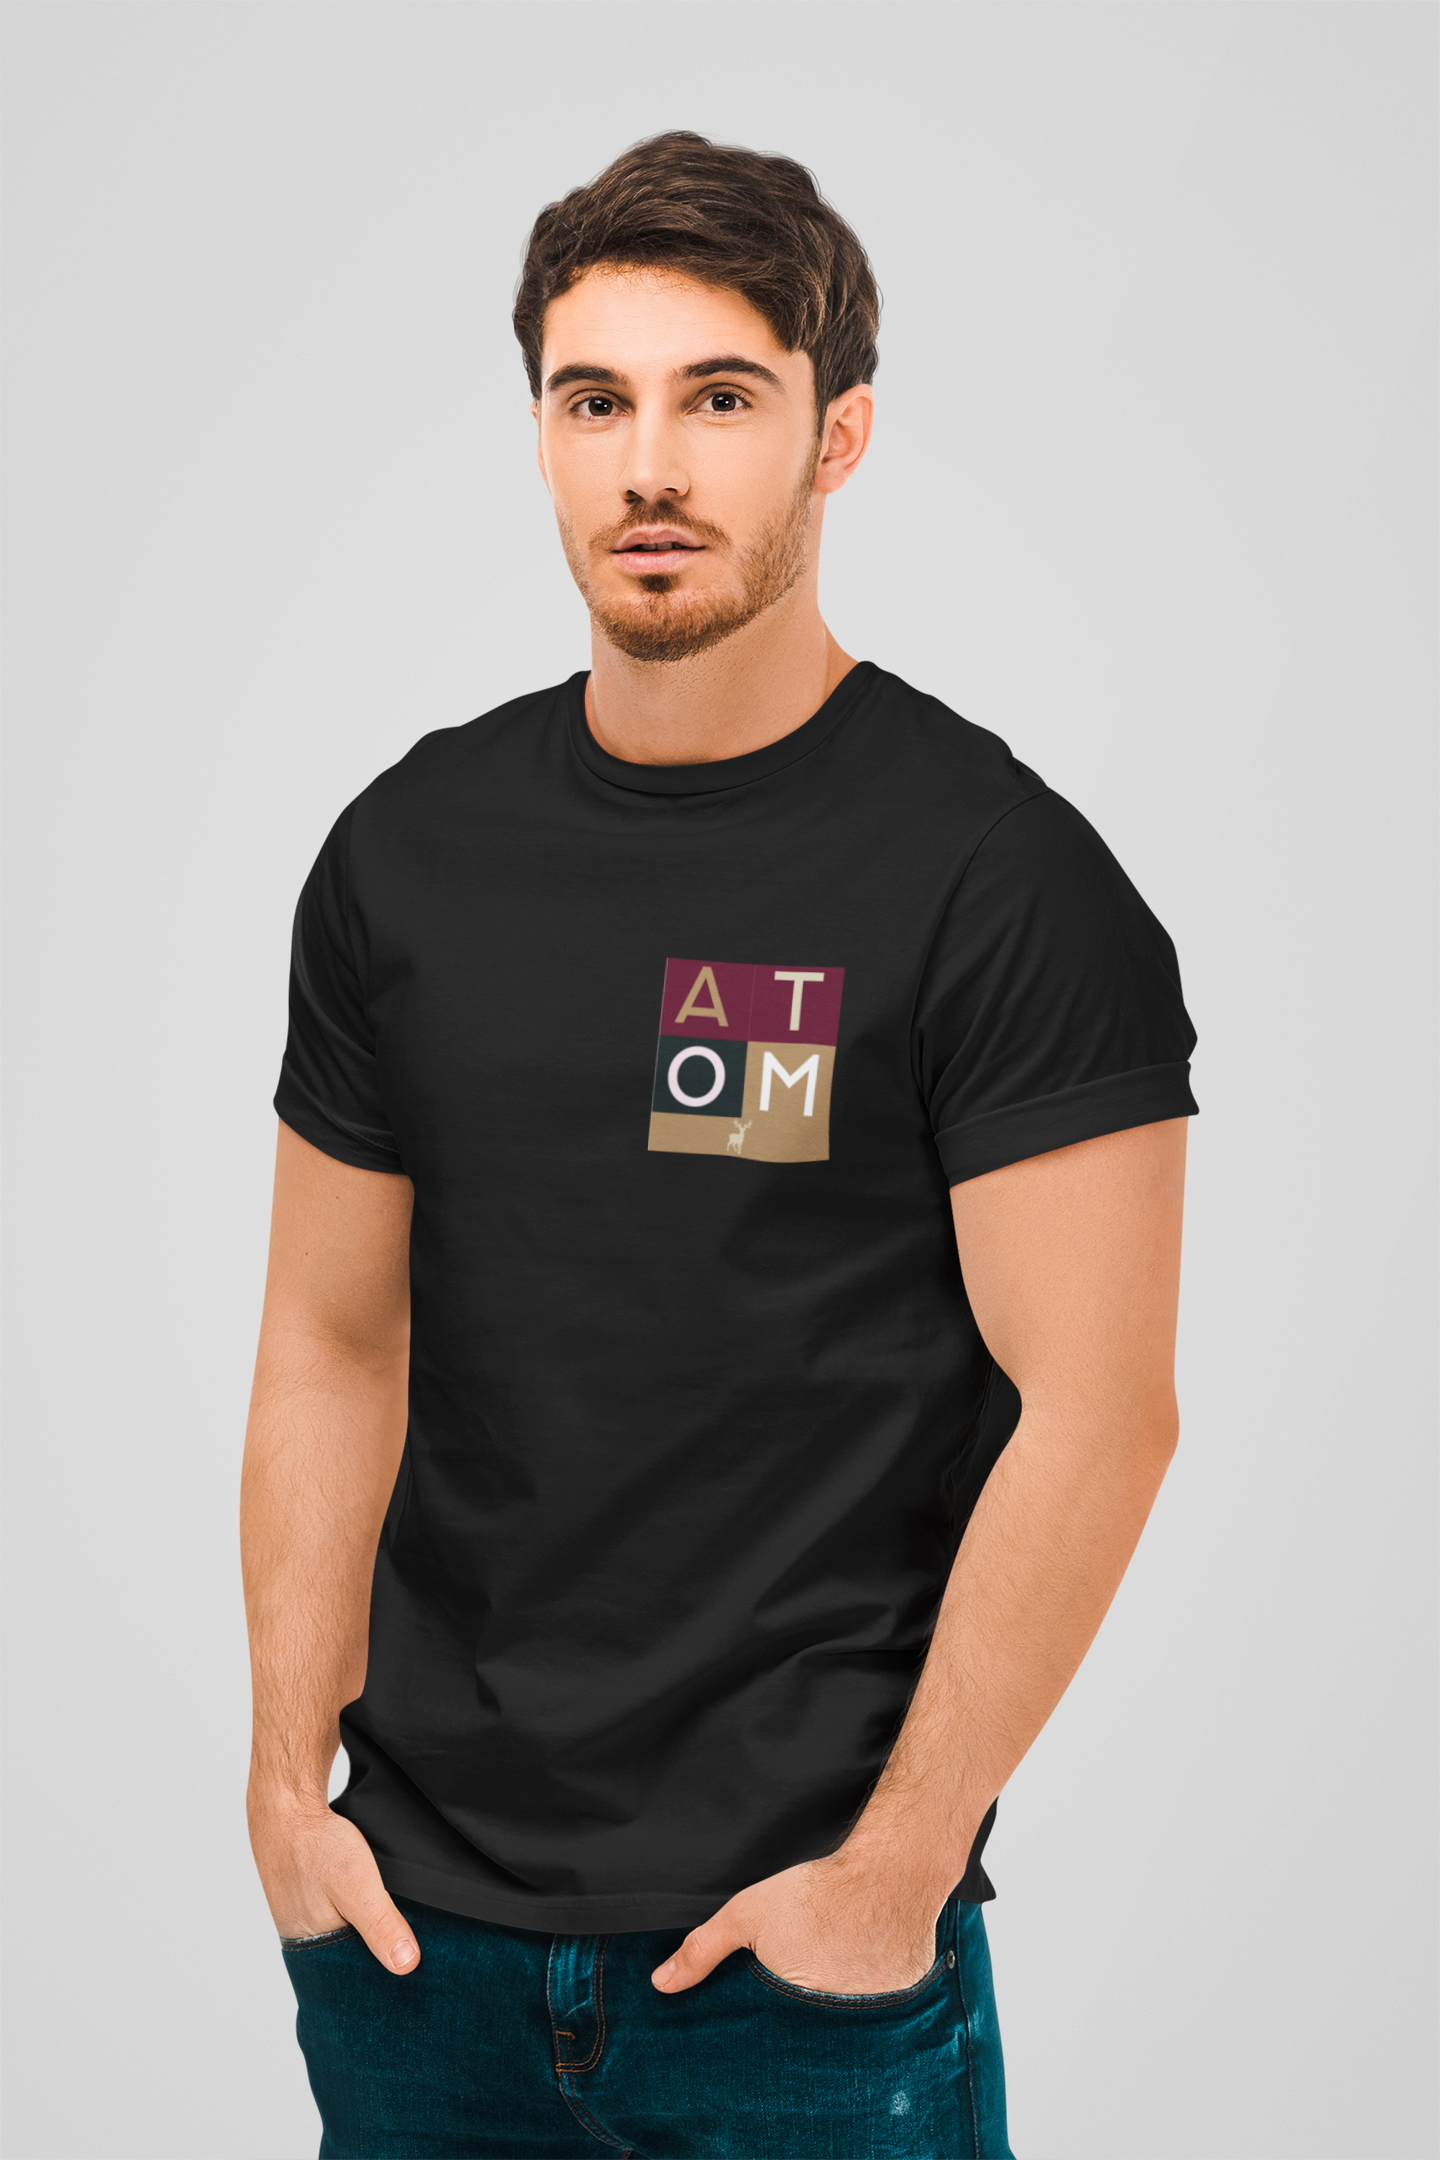 ATOM Signature Maroon Pocket Icon Black Round Neck T-Shirt for Men.